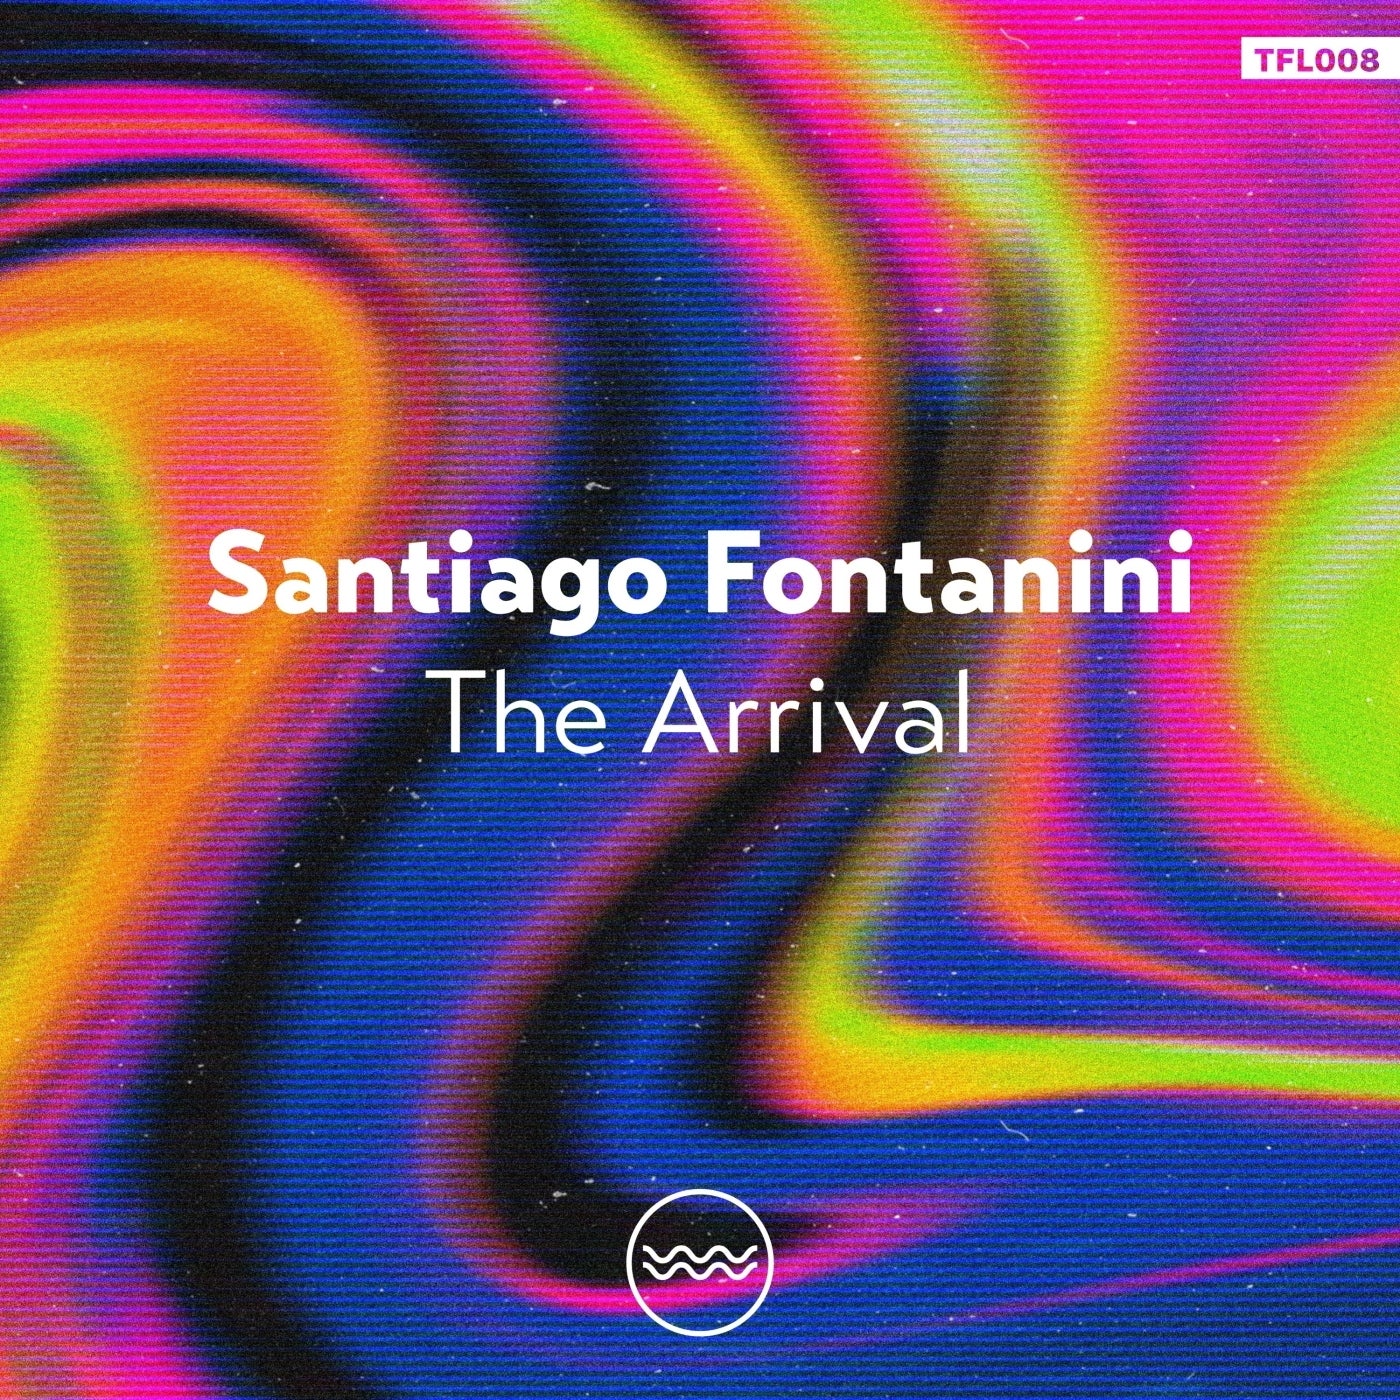 Santiago Fontanini – The Arrival [TFL008]